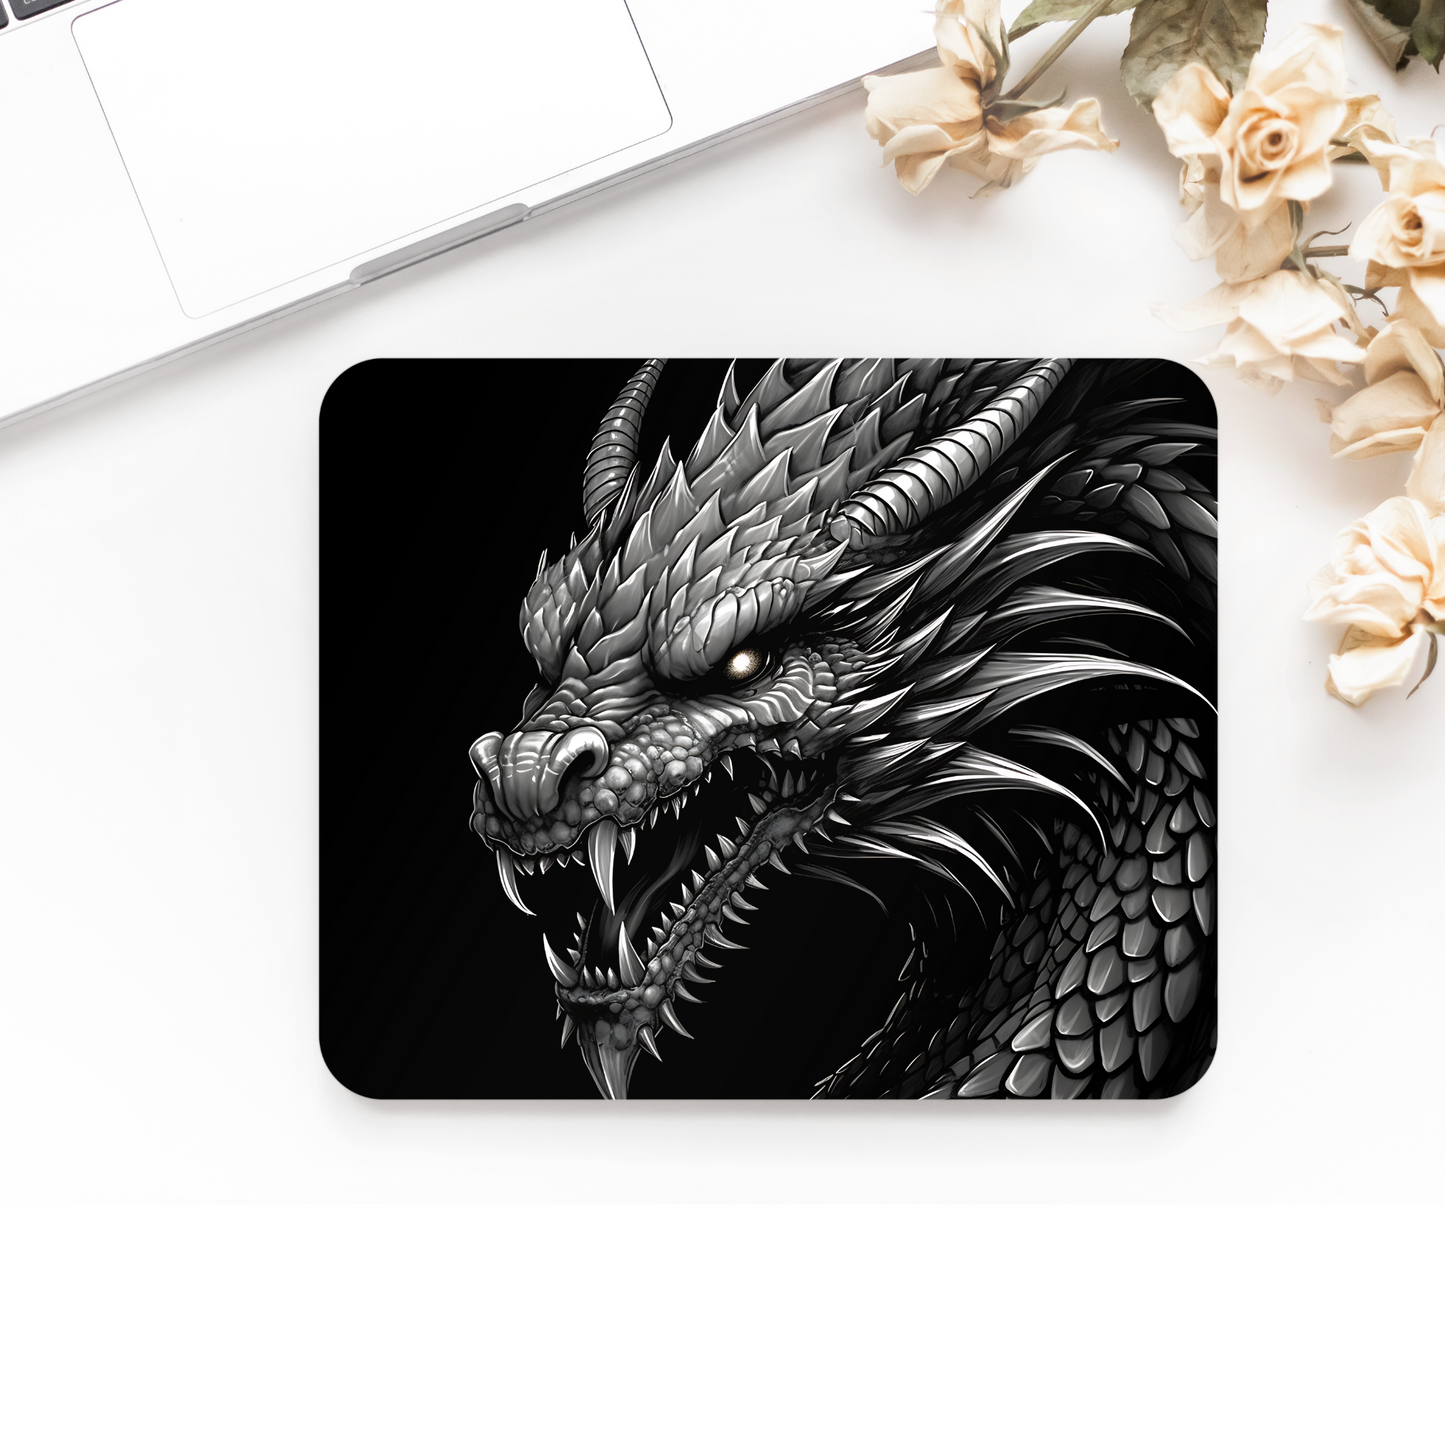 Premium Printed Anti-Slip Mouse Mat - Ultra Durable Fantasy Dragon Design